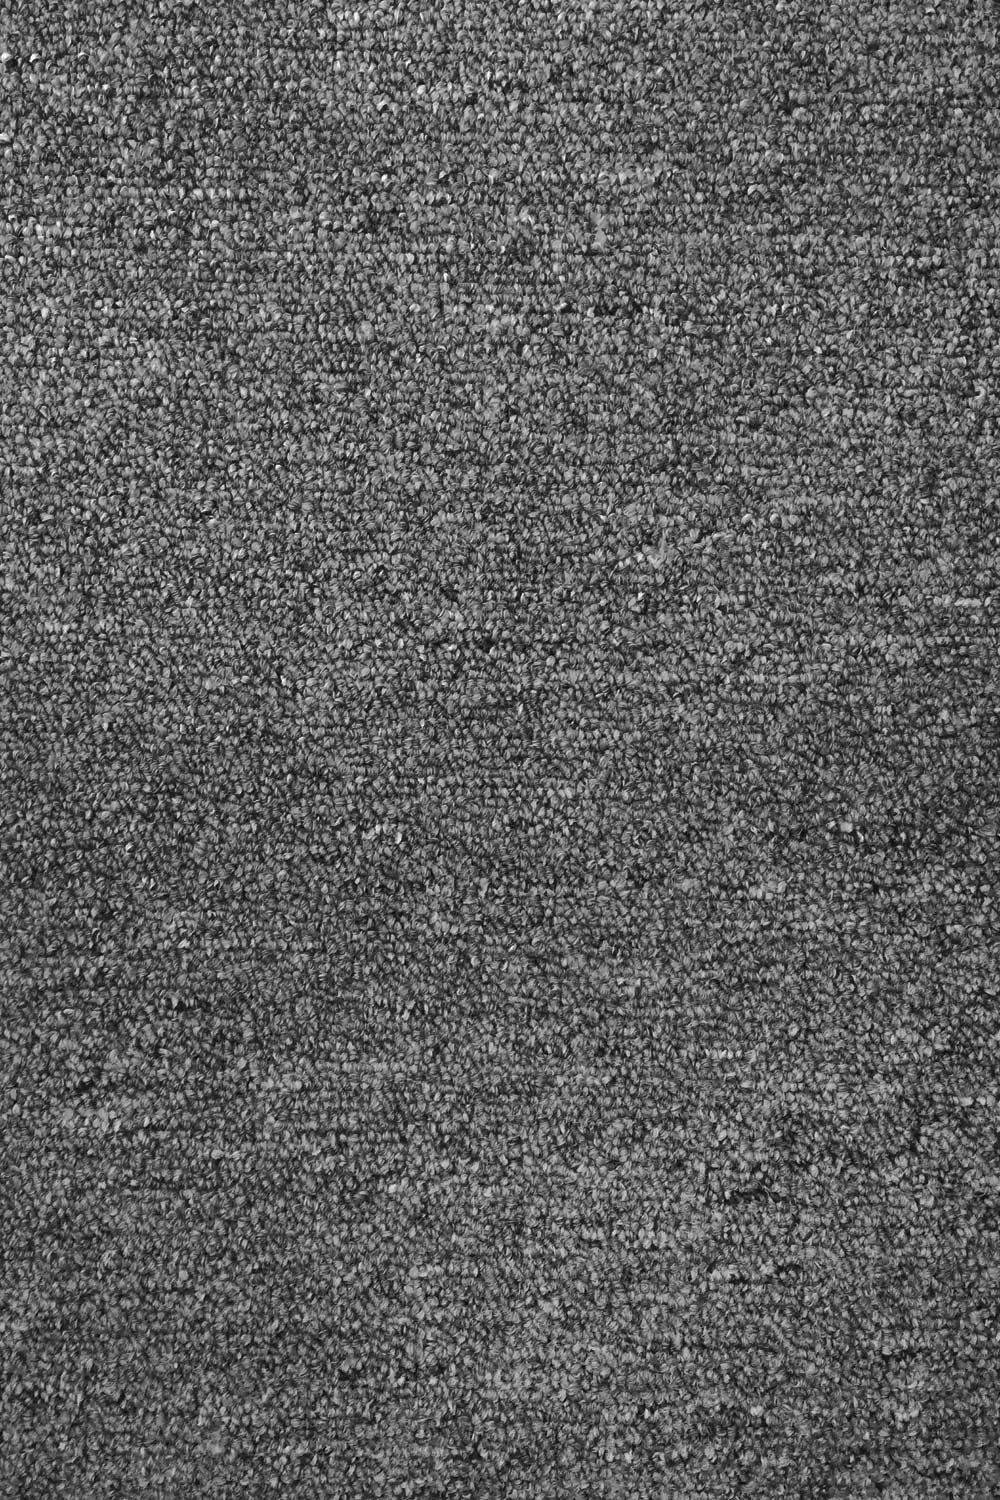 Metrážny koberec RAMBO-BET 78 400 cm